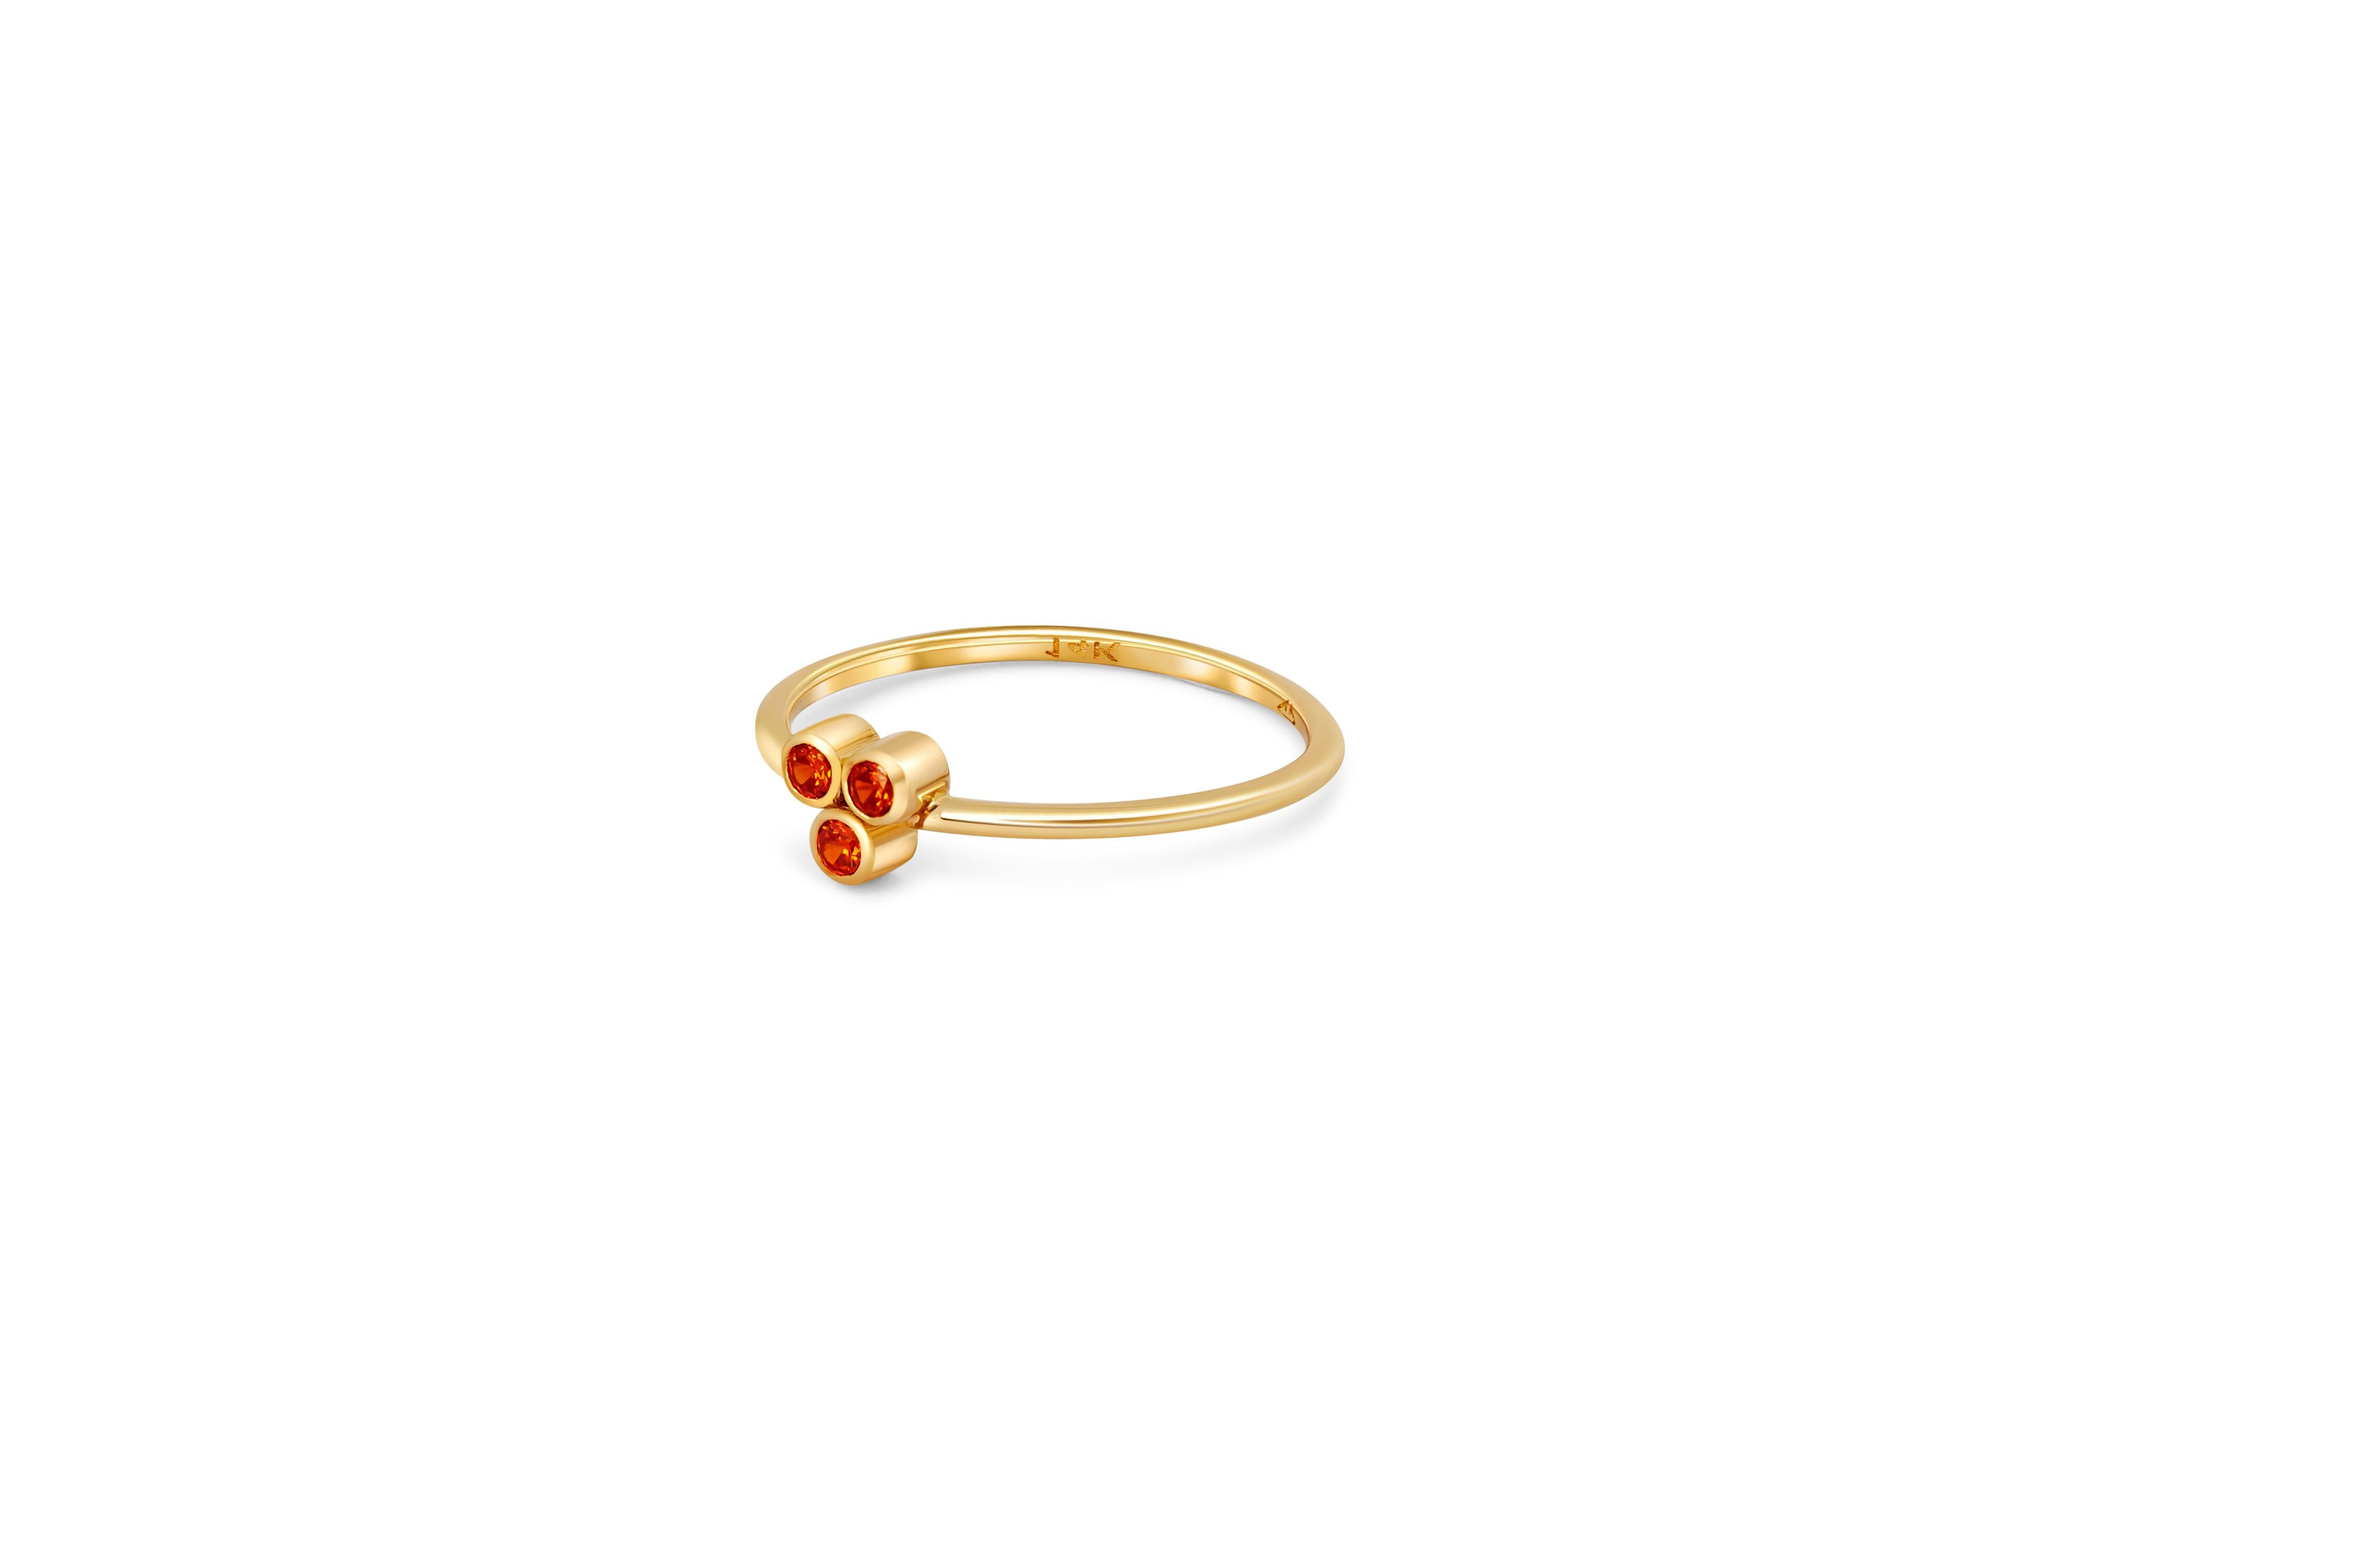 Three Stone 14k gold ring.  Triple Stone Ring. Minimalist  orange lab sapphire ring. Dainty gemstone Ring. Thin Band Ring. Stacking Band Ring.

Metal: 14k gold
Weight: 1.8 gr depends from size
Lab sapphires, 3 stone, orange color, round brilliant